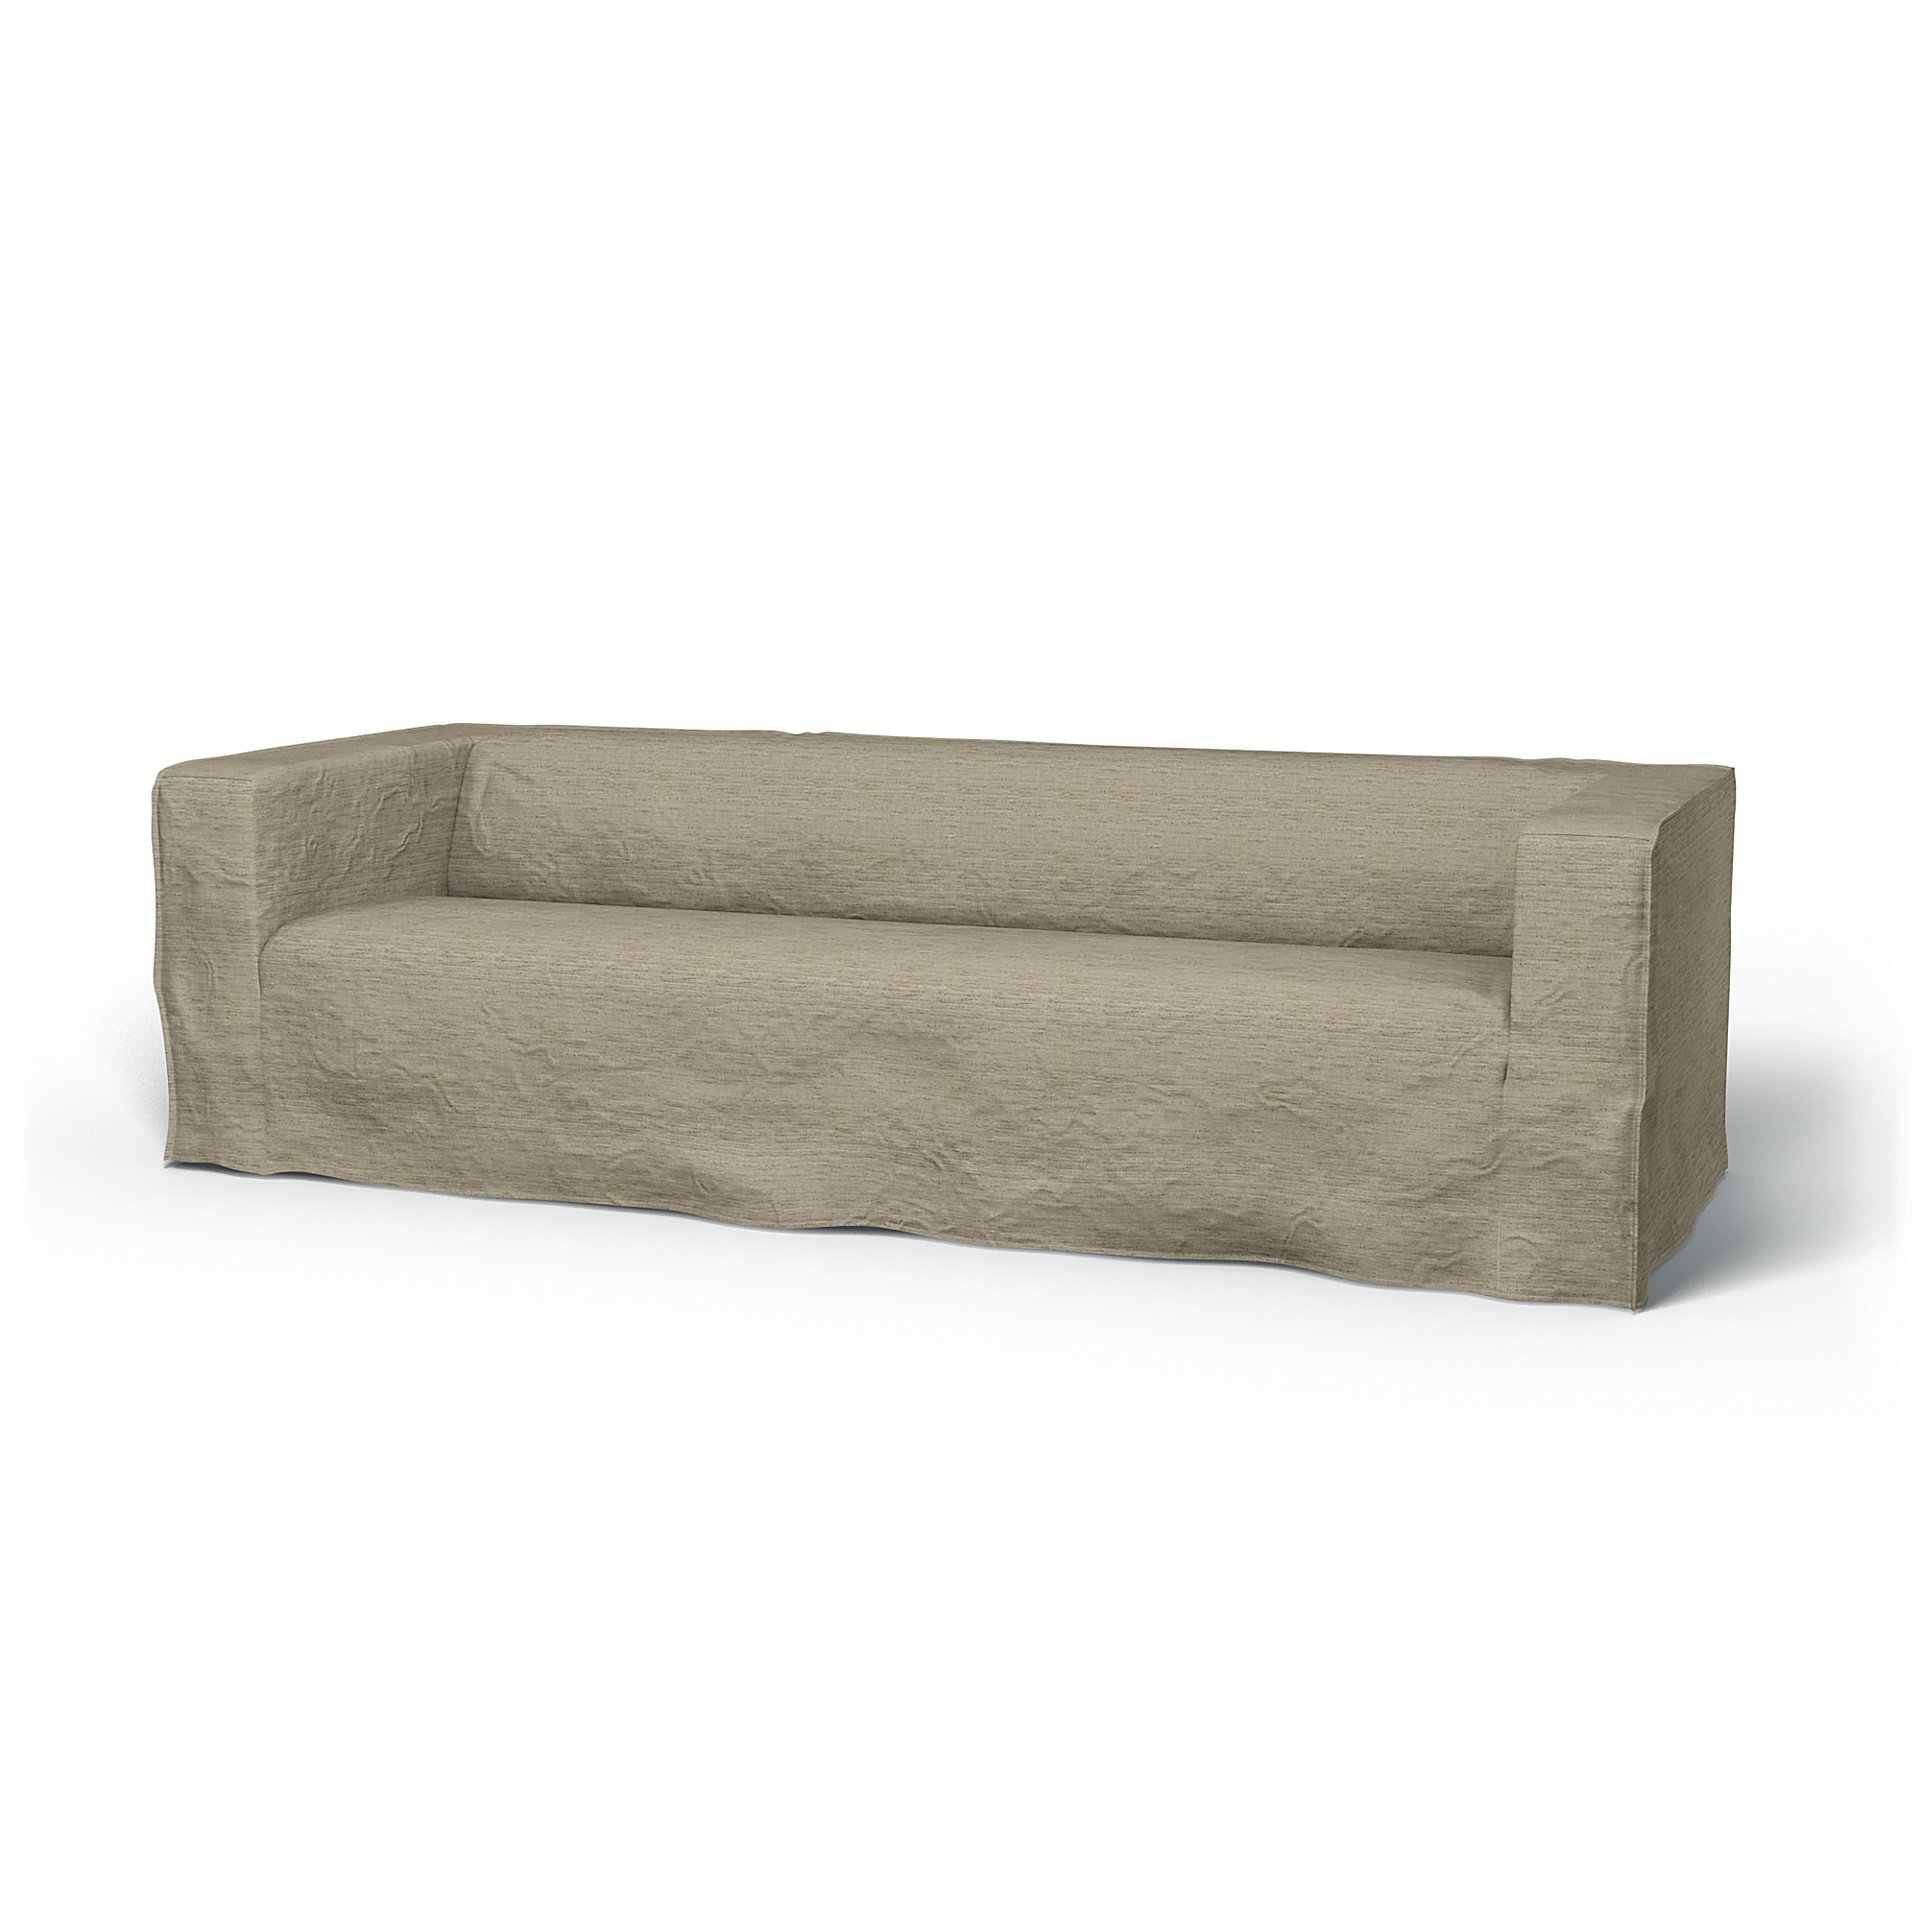 IKEA - Klippan 4 Seater Sofa Cover, Light Sand, Boucle & Texture - Bemz